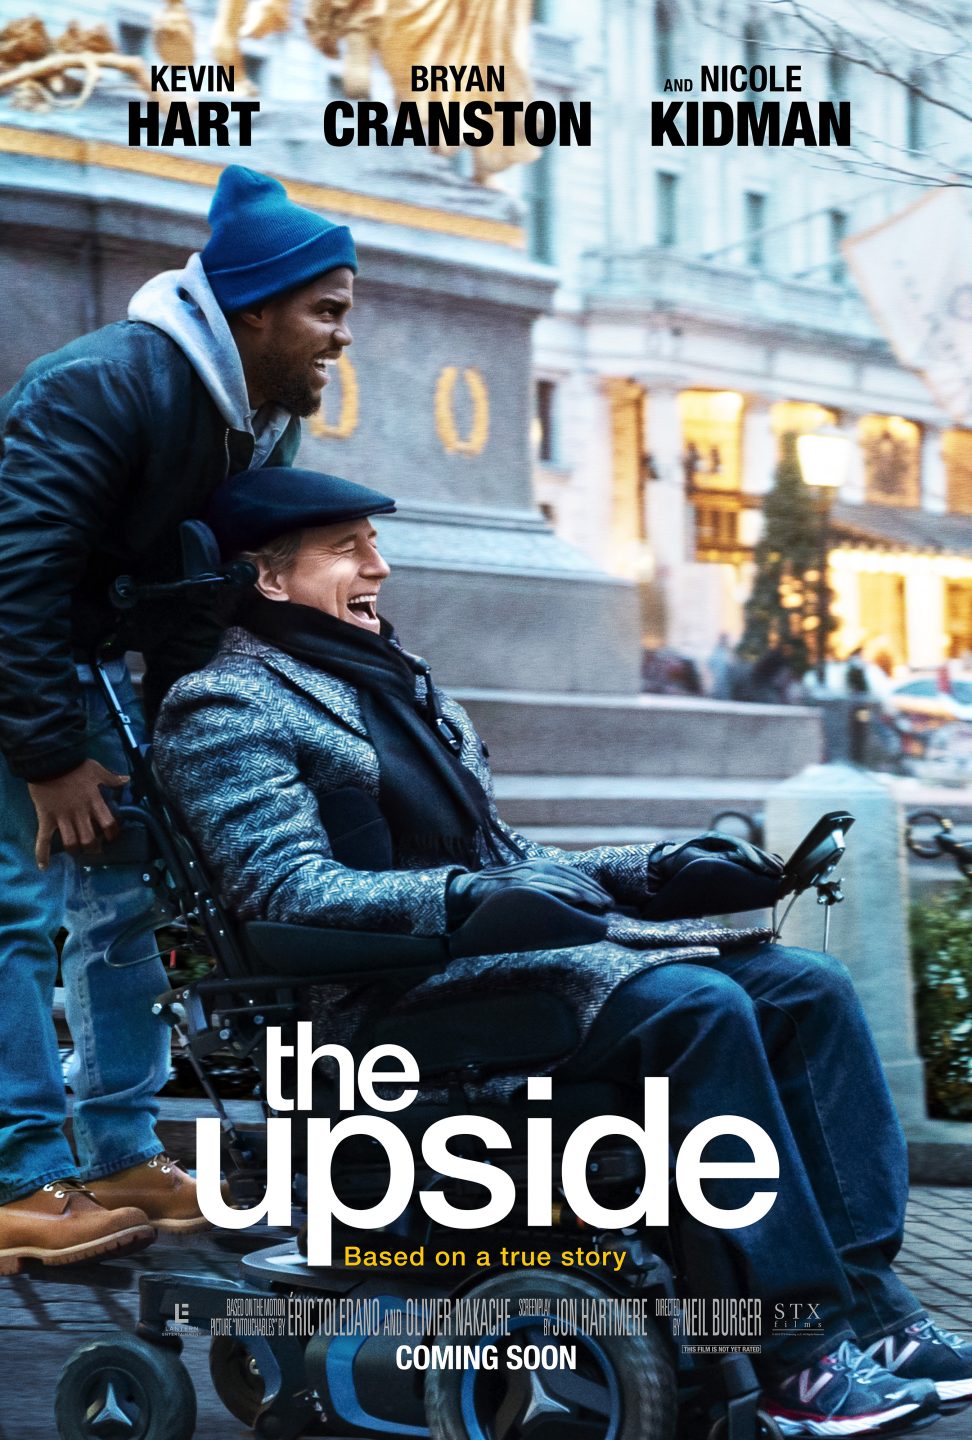 The Upside poster (STX Films)